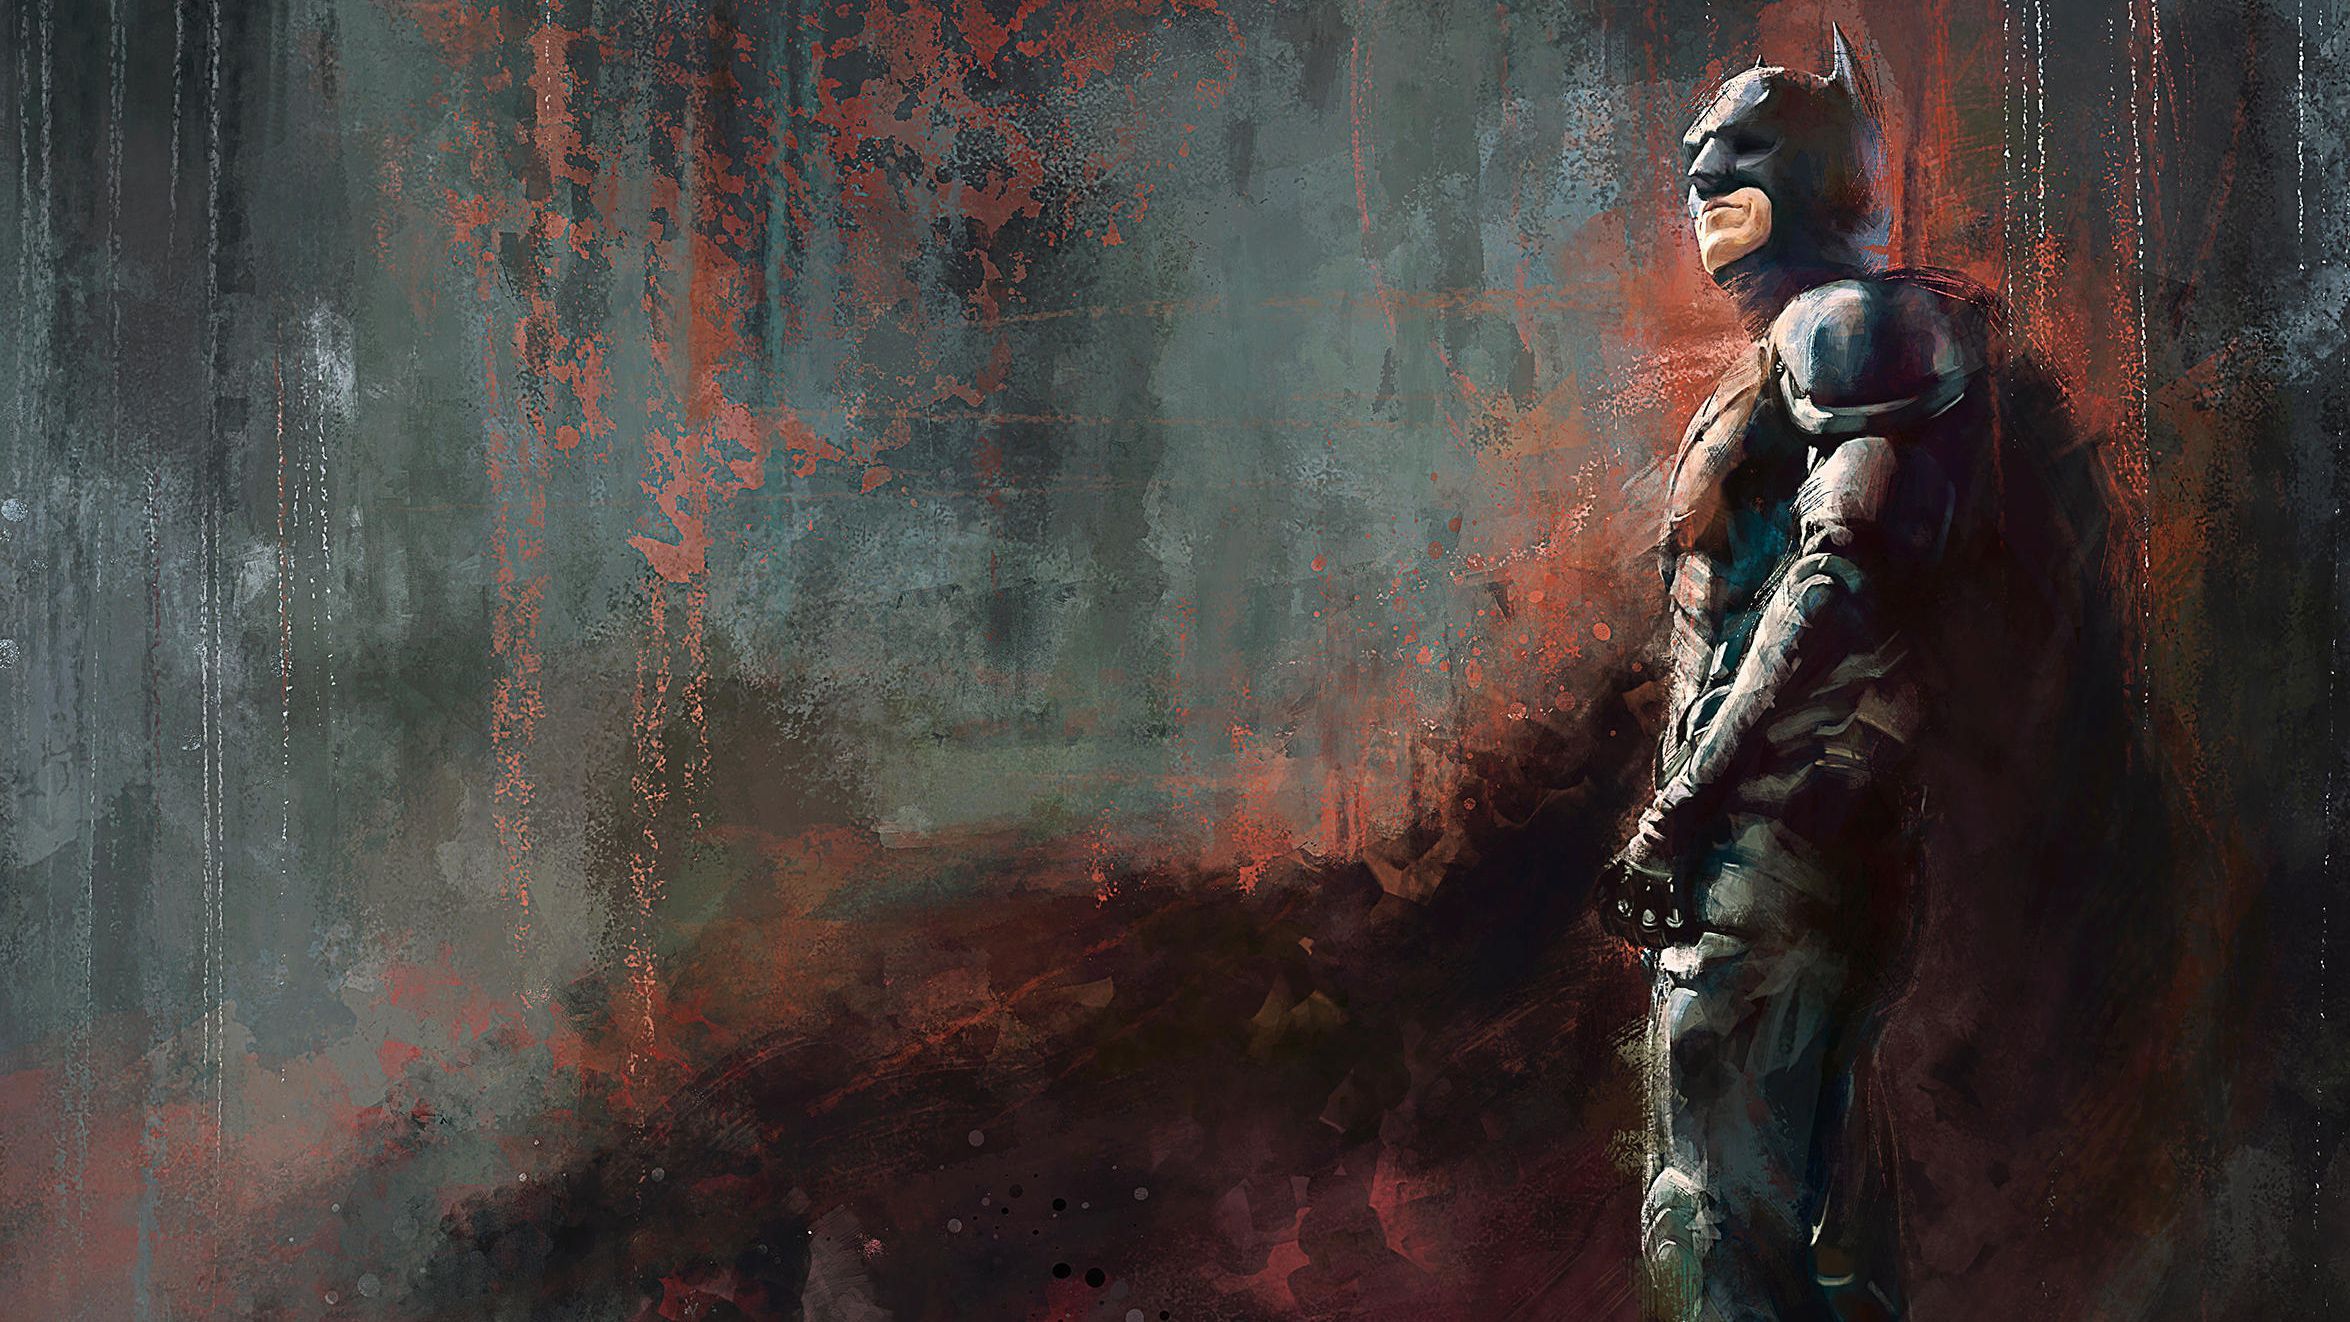 The Dark Knight Artworks 4k Superheroes Wallpaper, Hd Wallpaper, Digital Art Wallpaper, Wallpaper, Batman Wallp. Batman Art, Batman Artwork, Batman